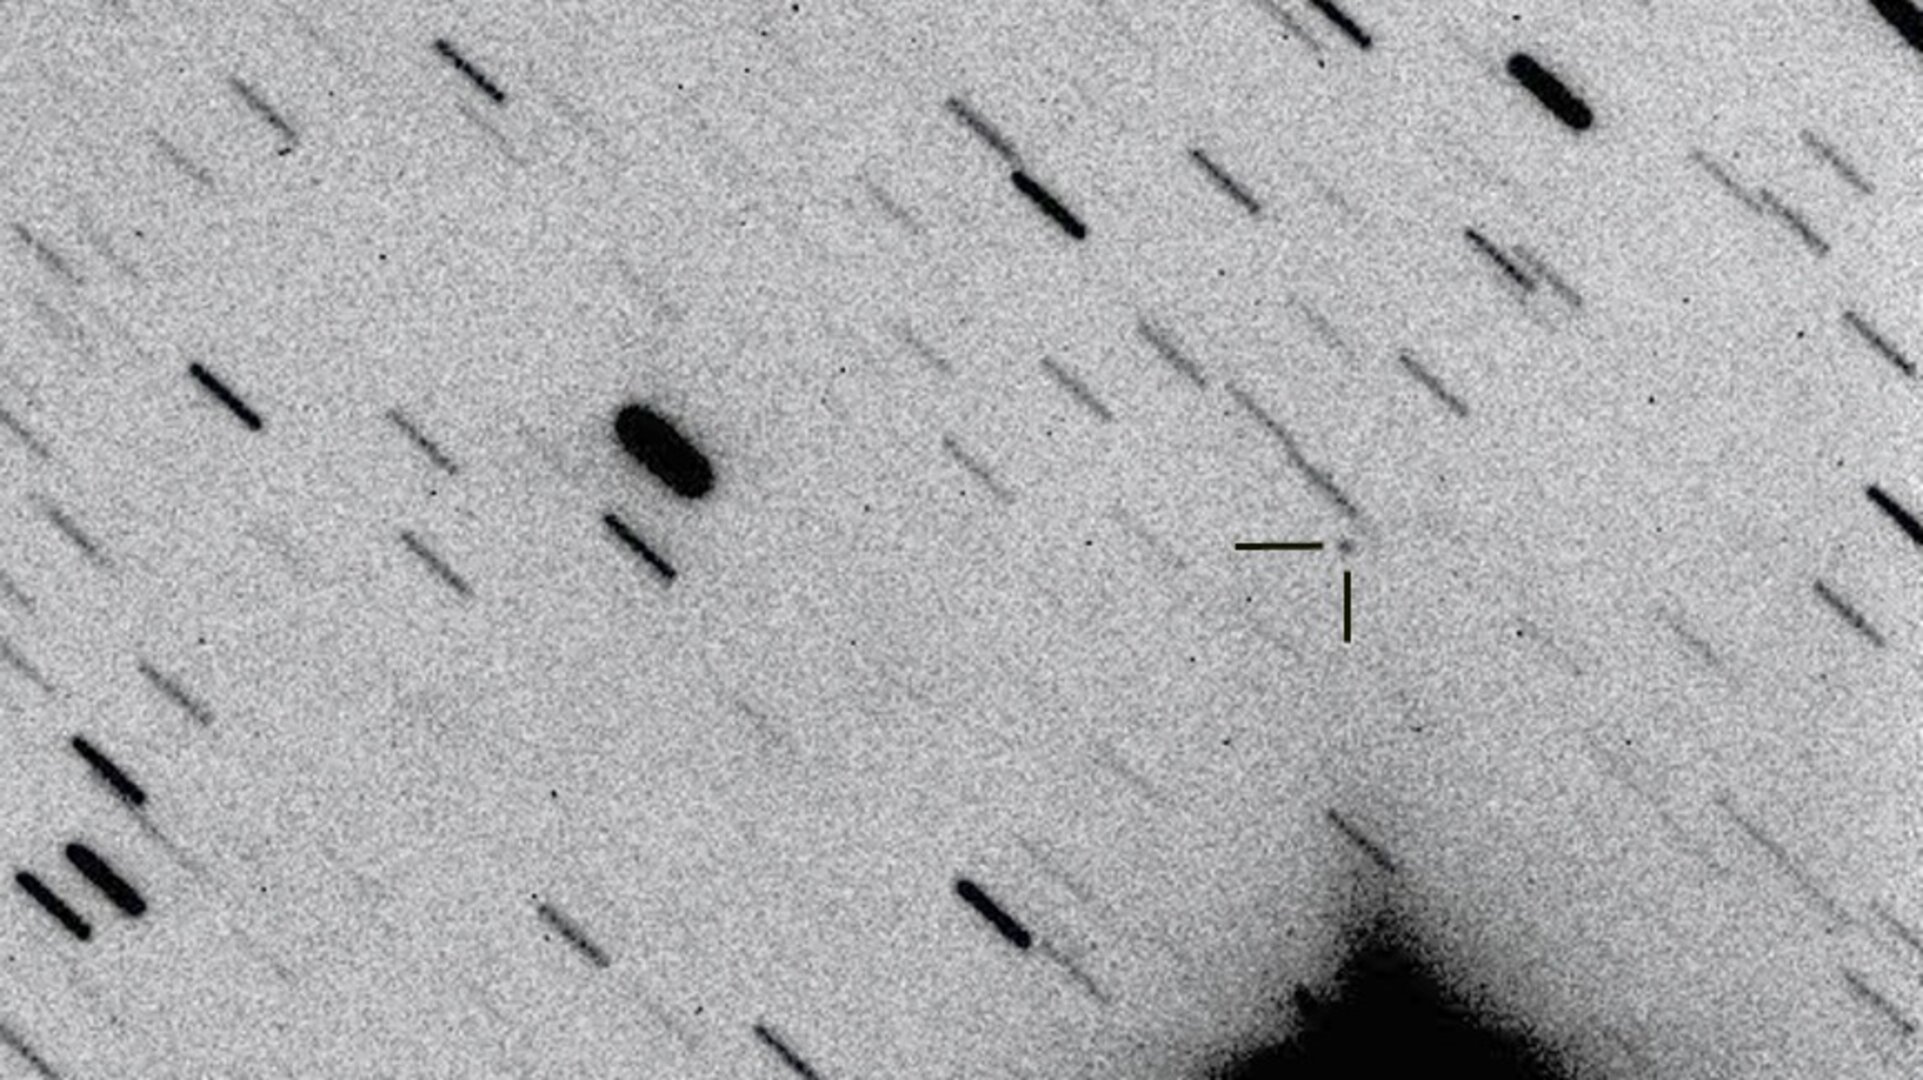 Herschel observed from the ground